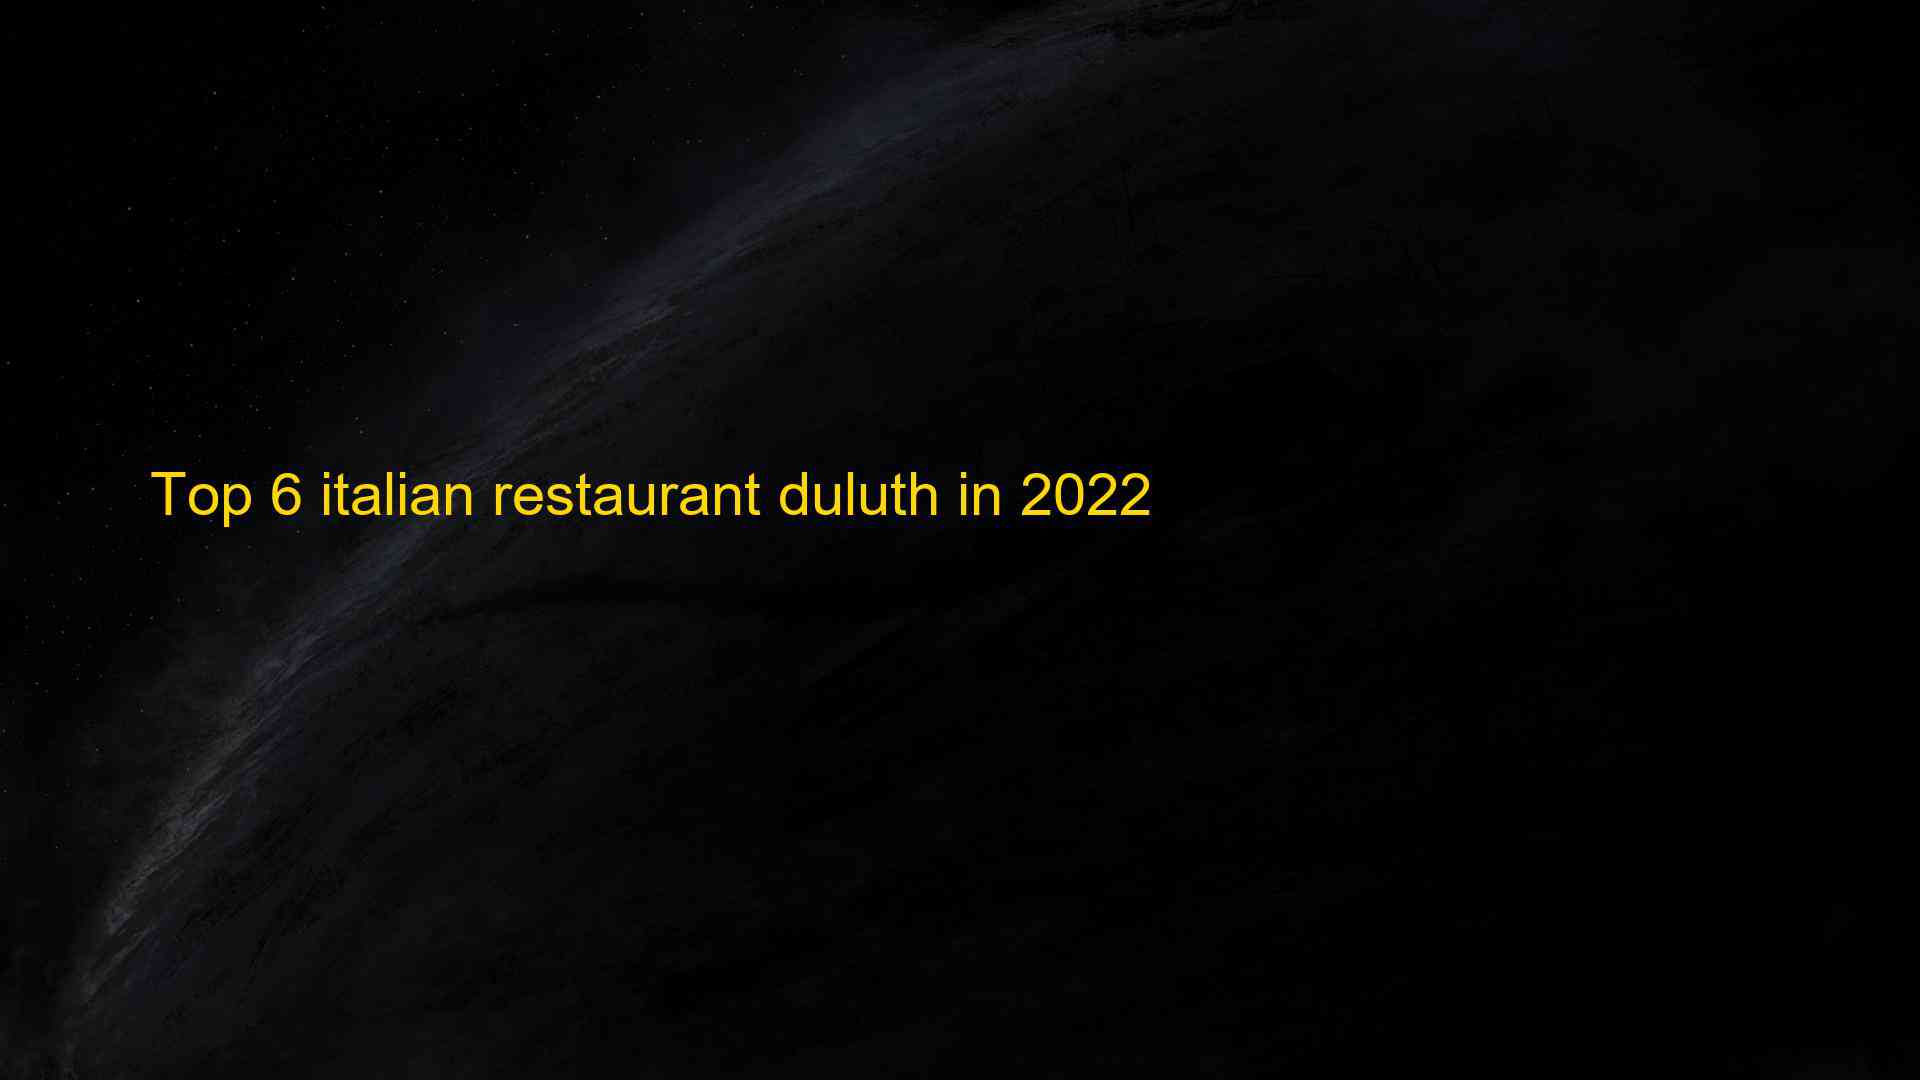 Top 6 italian restaurant duluth in 2022 1663004171